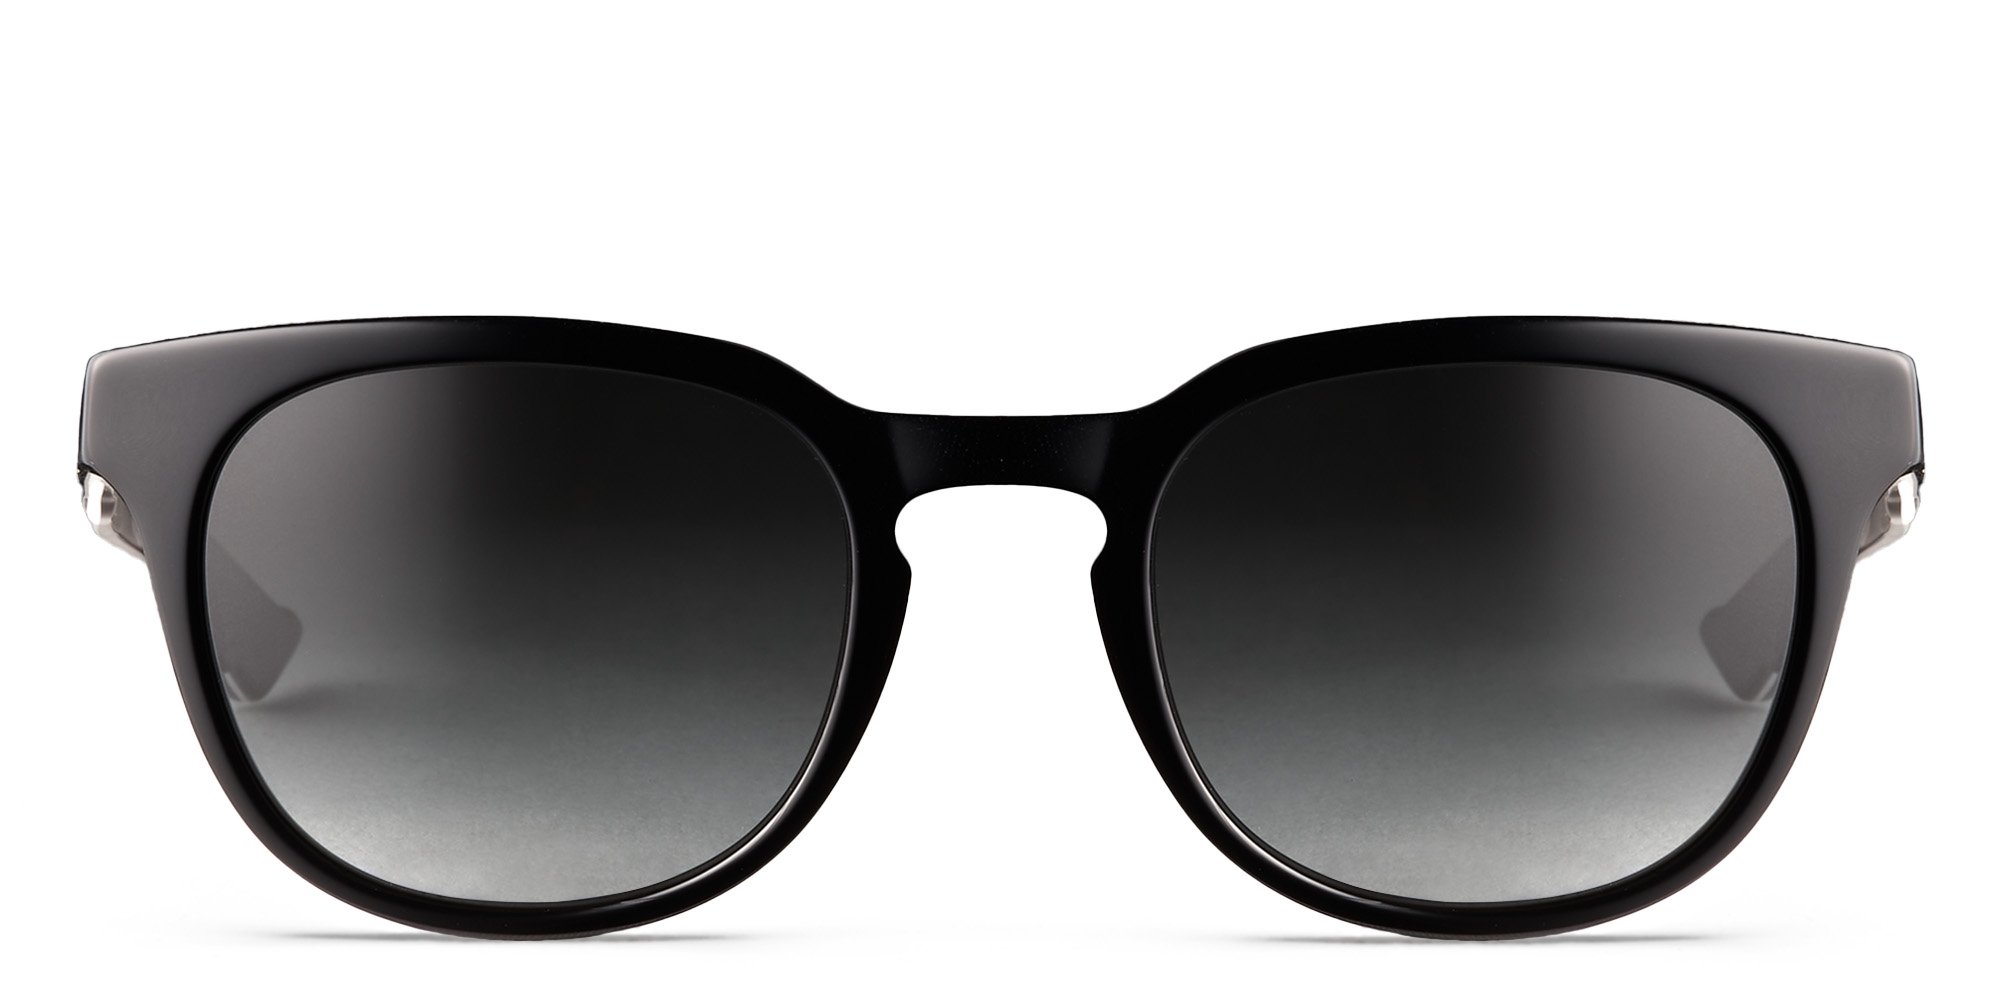 Dior B241 Translucent Blue Rectangular Sunglasses Mens Fashion Watches   Accessories Sunglasses  Eyewear on Carousell